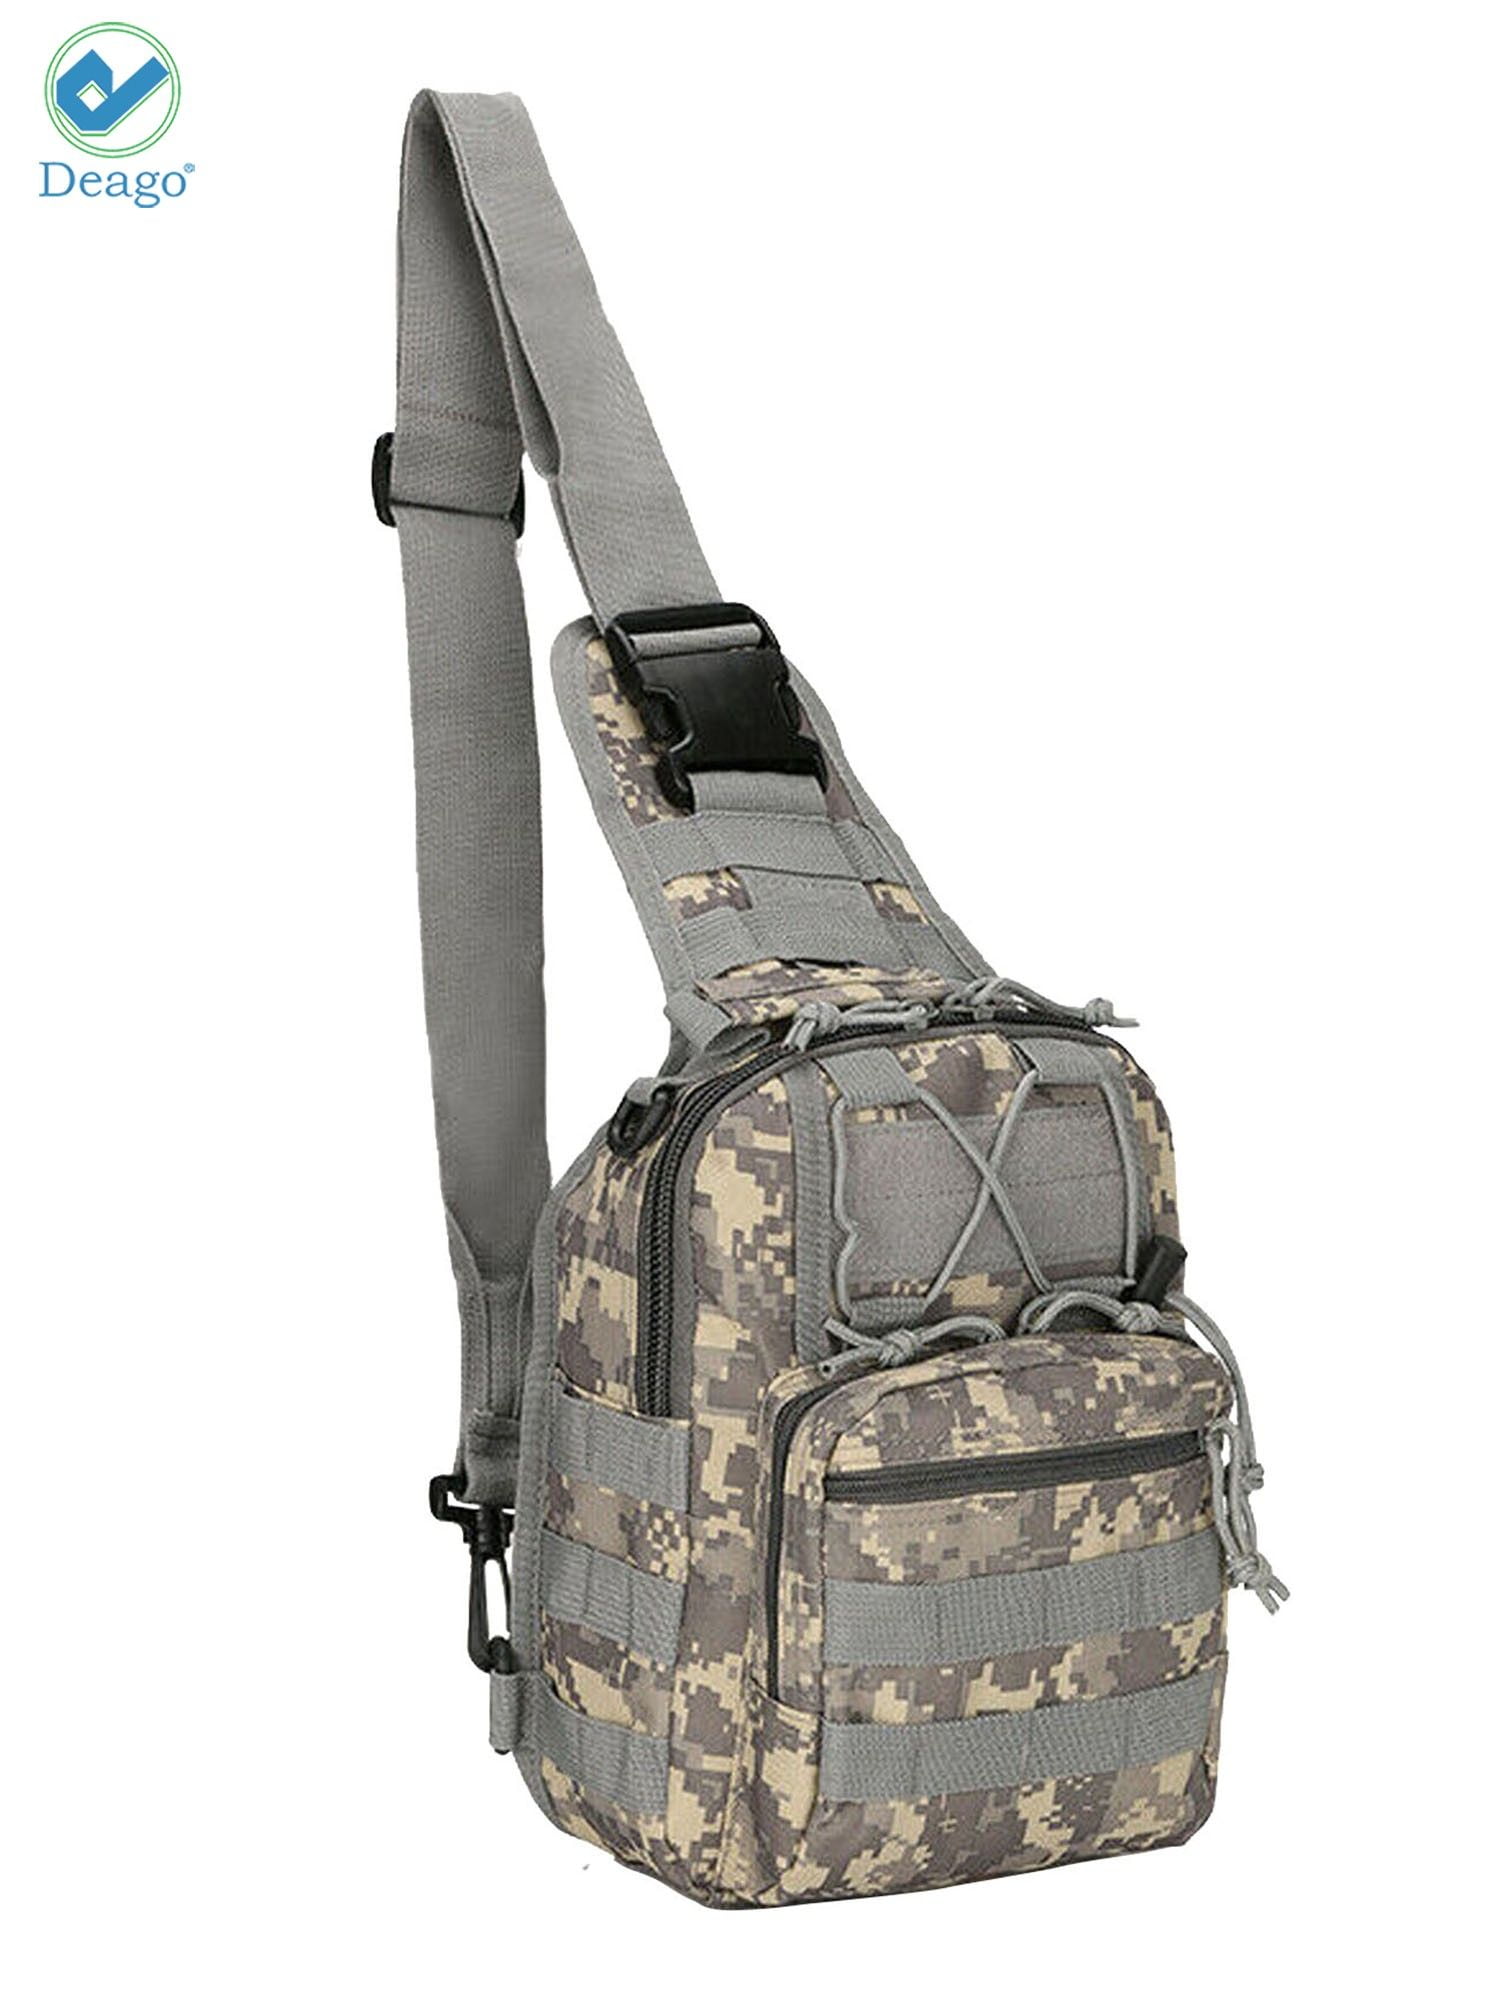 Tactical Military Men's Shoulder Bag Camping Hiking Camera Bag Messenger Handbag